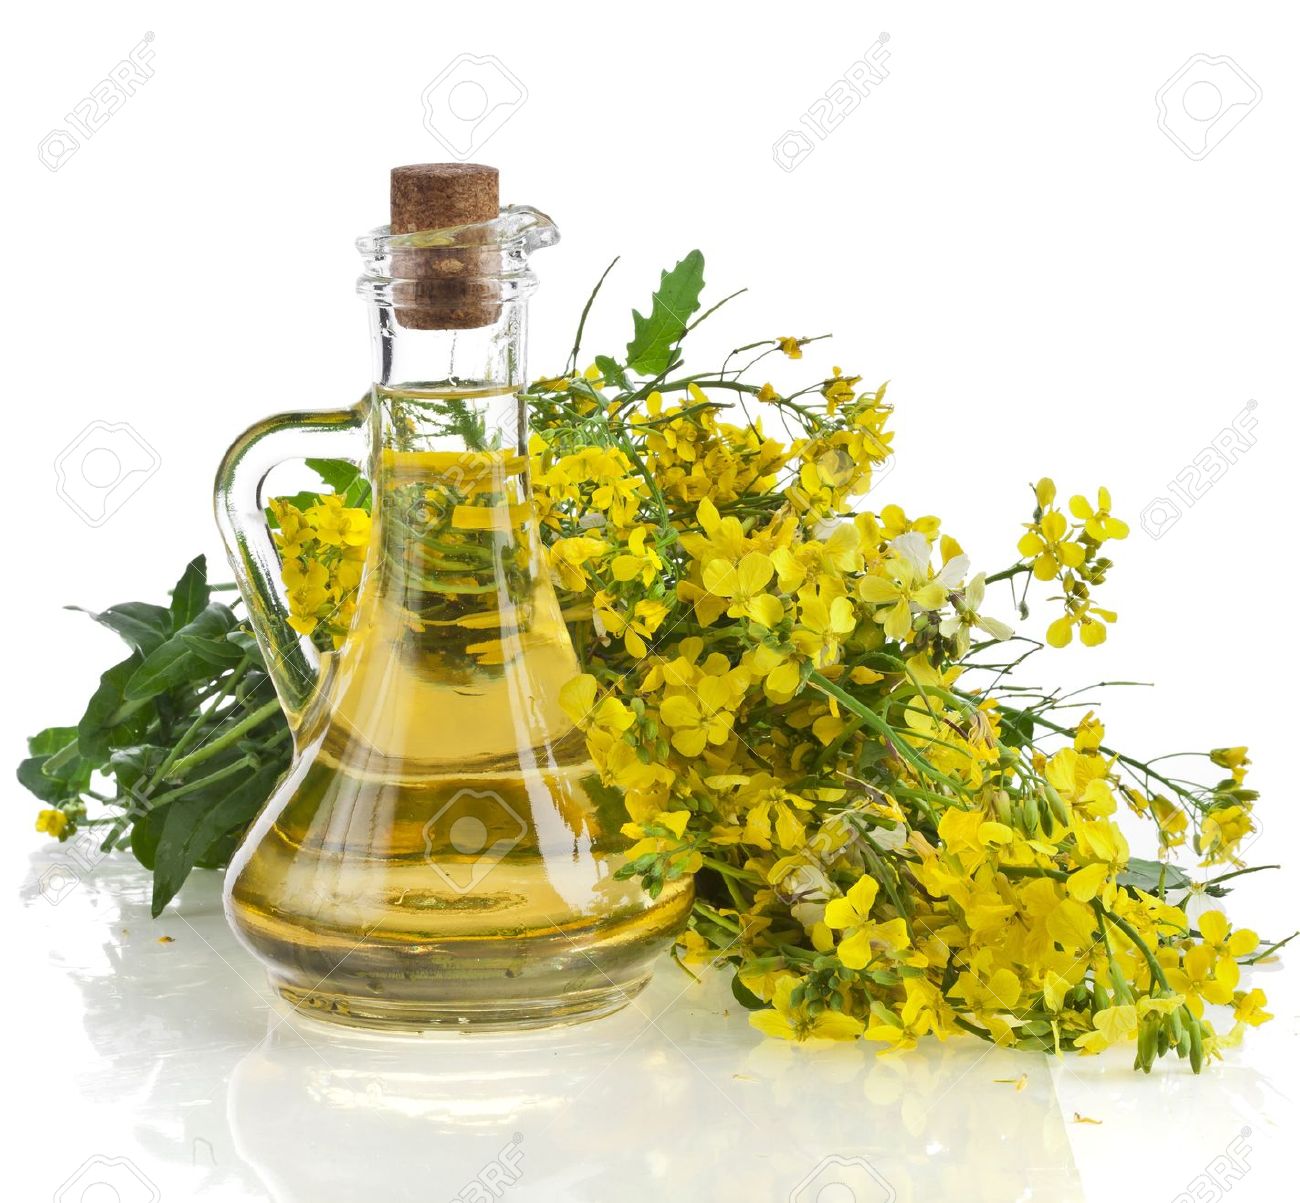 Aba - Mustard Rape - Brassica alba - අබ - Herbal Plants of Asia